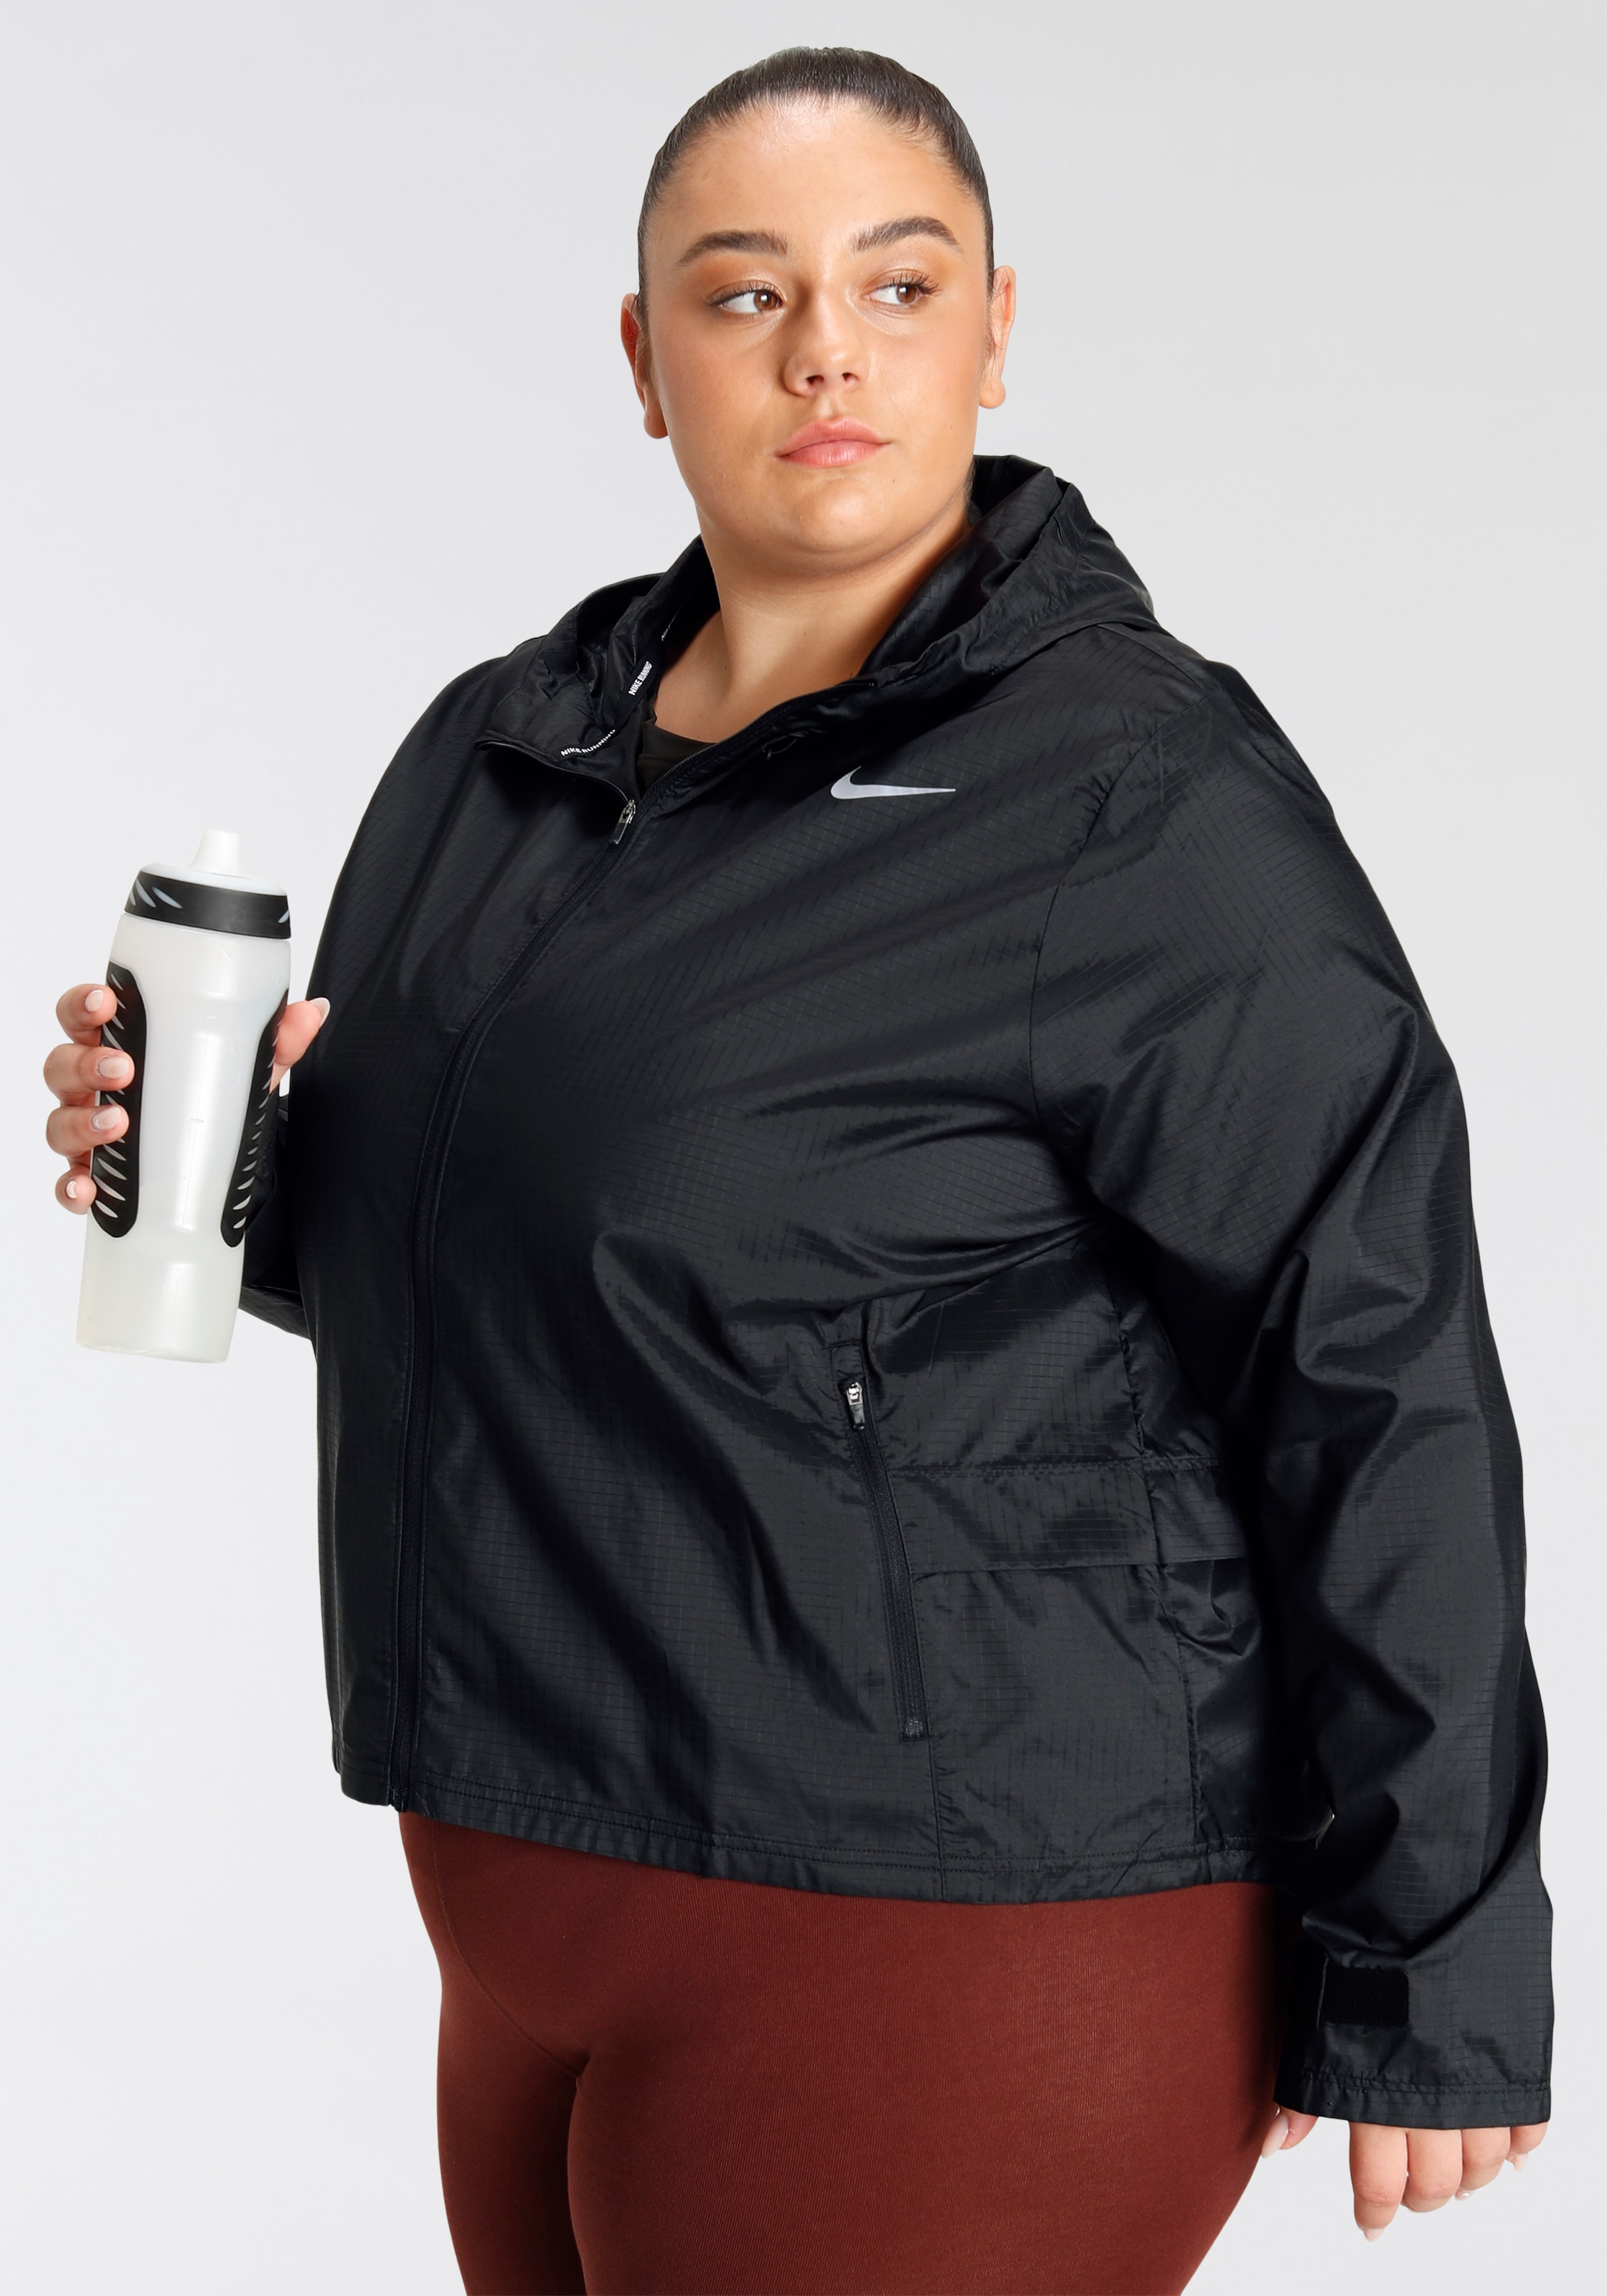 ♕ Nike Laufjacke »Essential Women's Running Jacket (Plus Size)«, mit Kapuze  versandkostenfrei bestellen